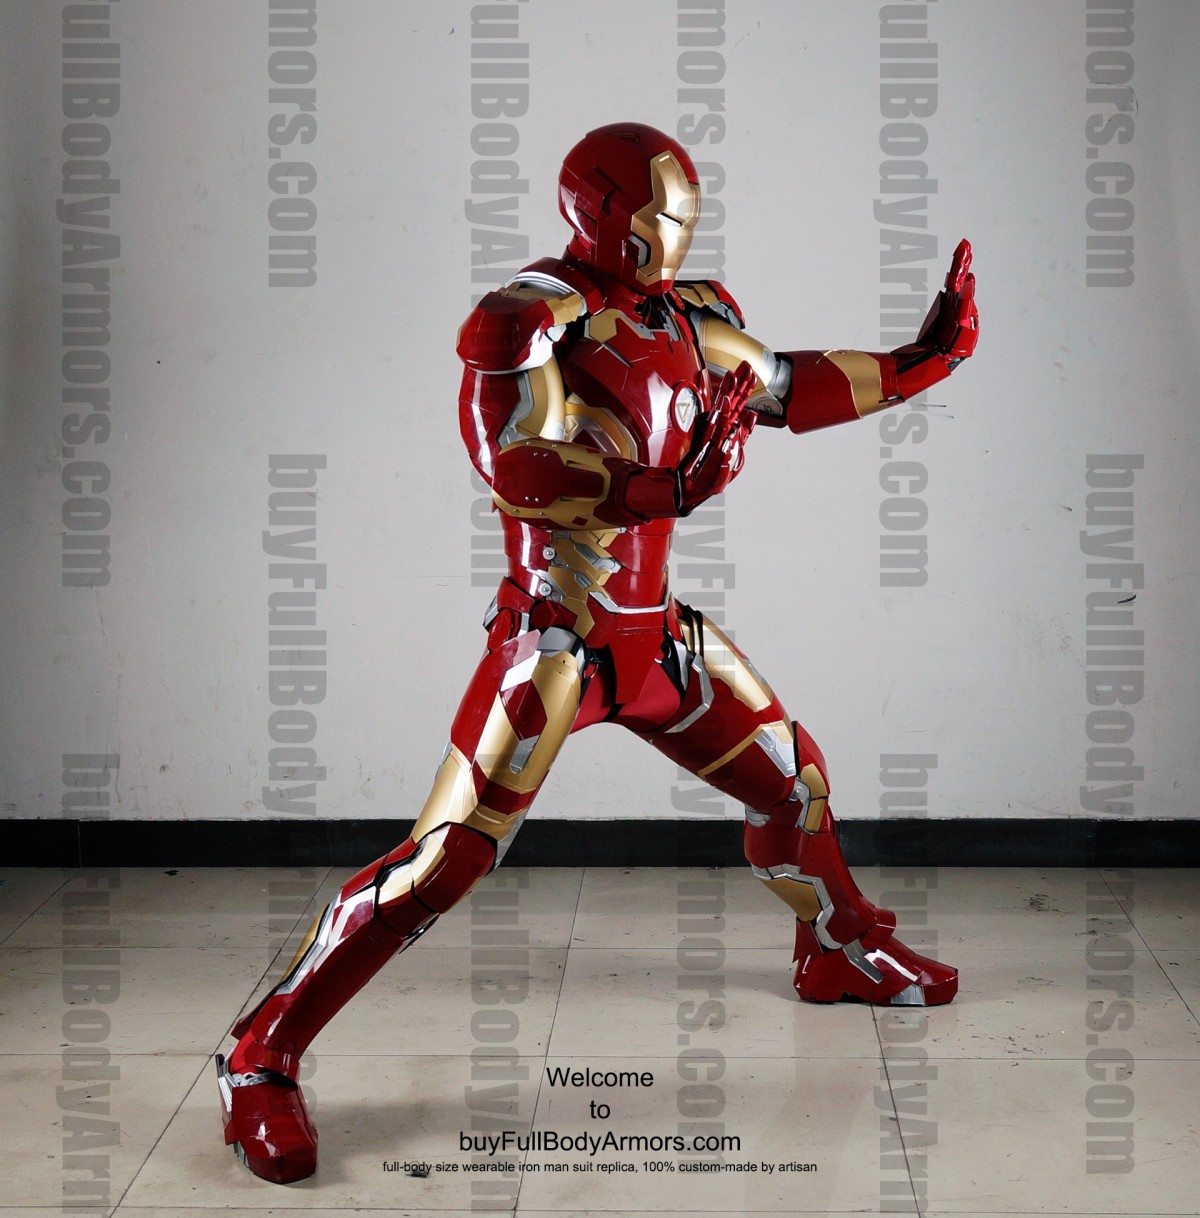 Buy Iron Man Suit Halo Master Chief Armor Batman Costume Star Wars Armor Buy The Wearable Iron Man Mark 43 Xliii Suit Costume Armor Buyfullbodyarmors Com